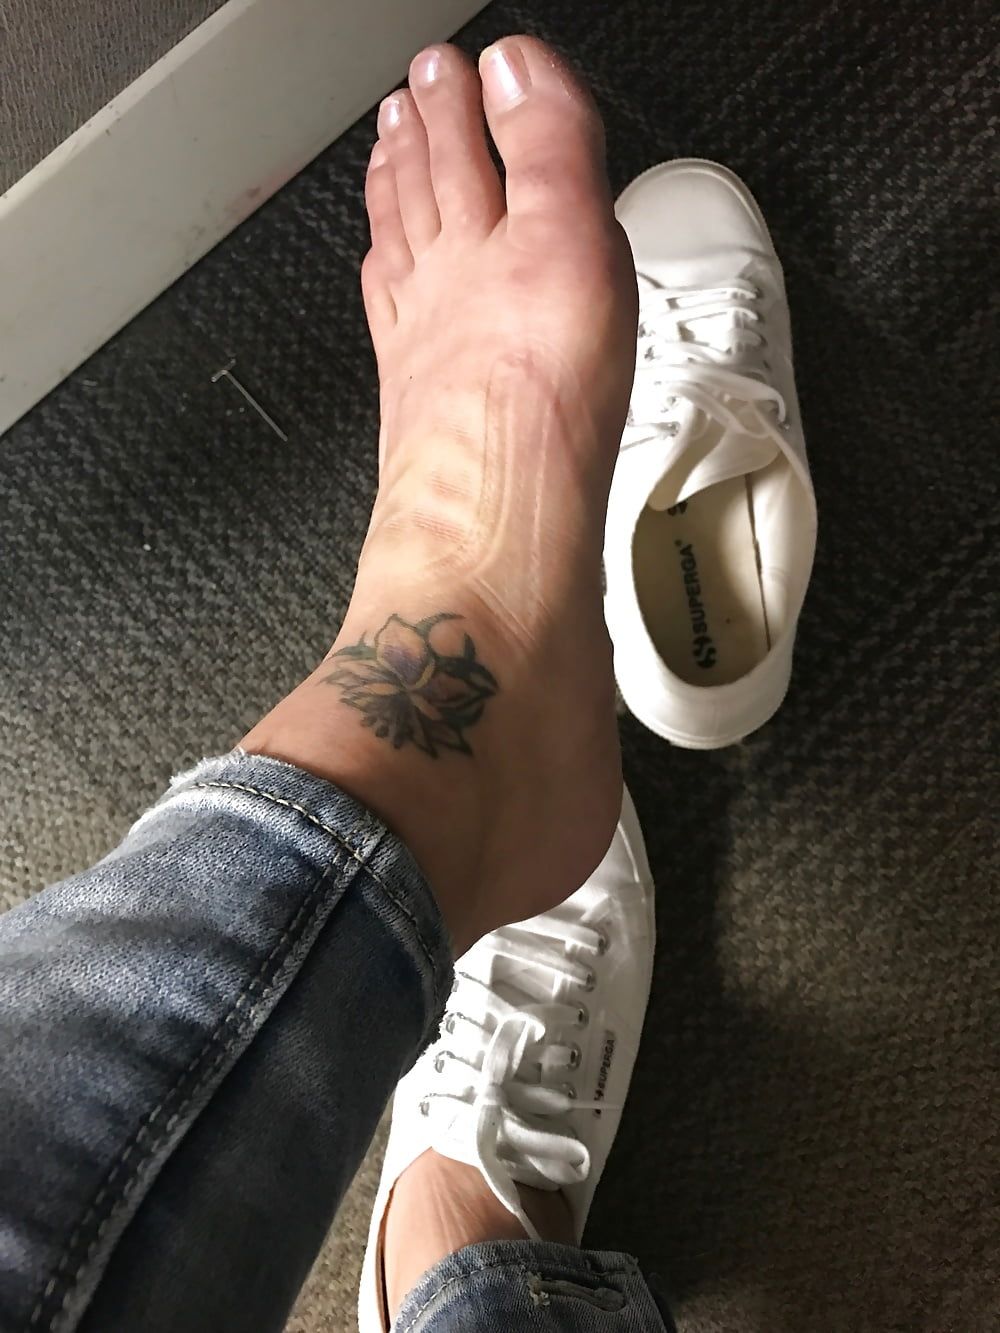 Foot fetish #4